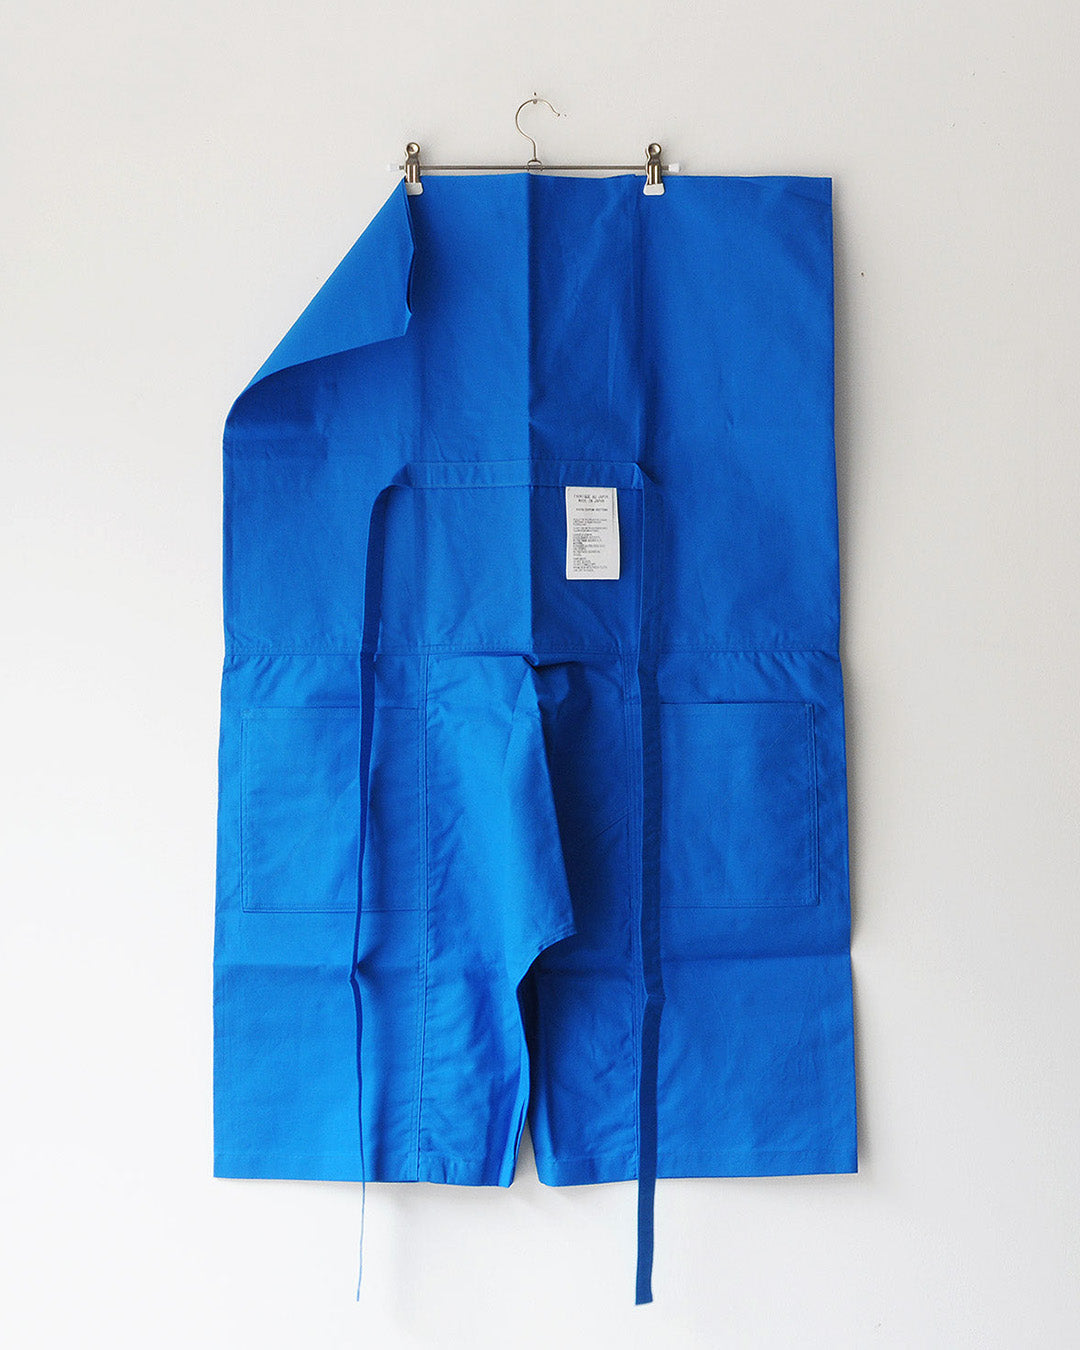 TUKI fisherman's shorts / blue